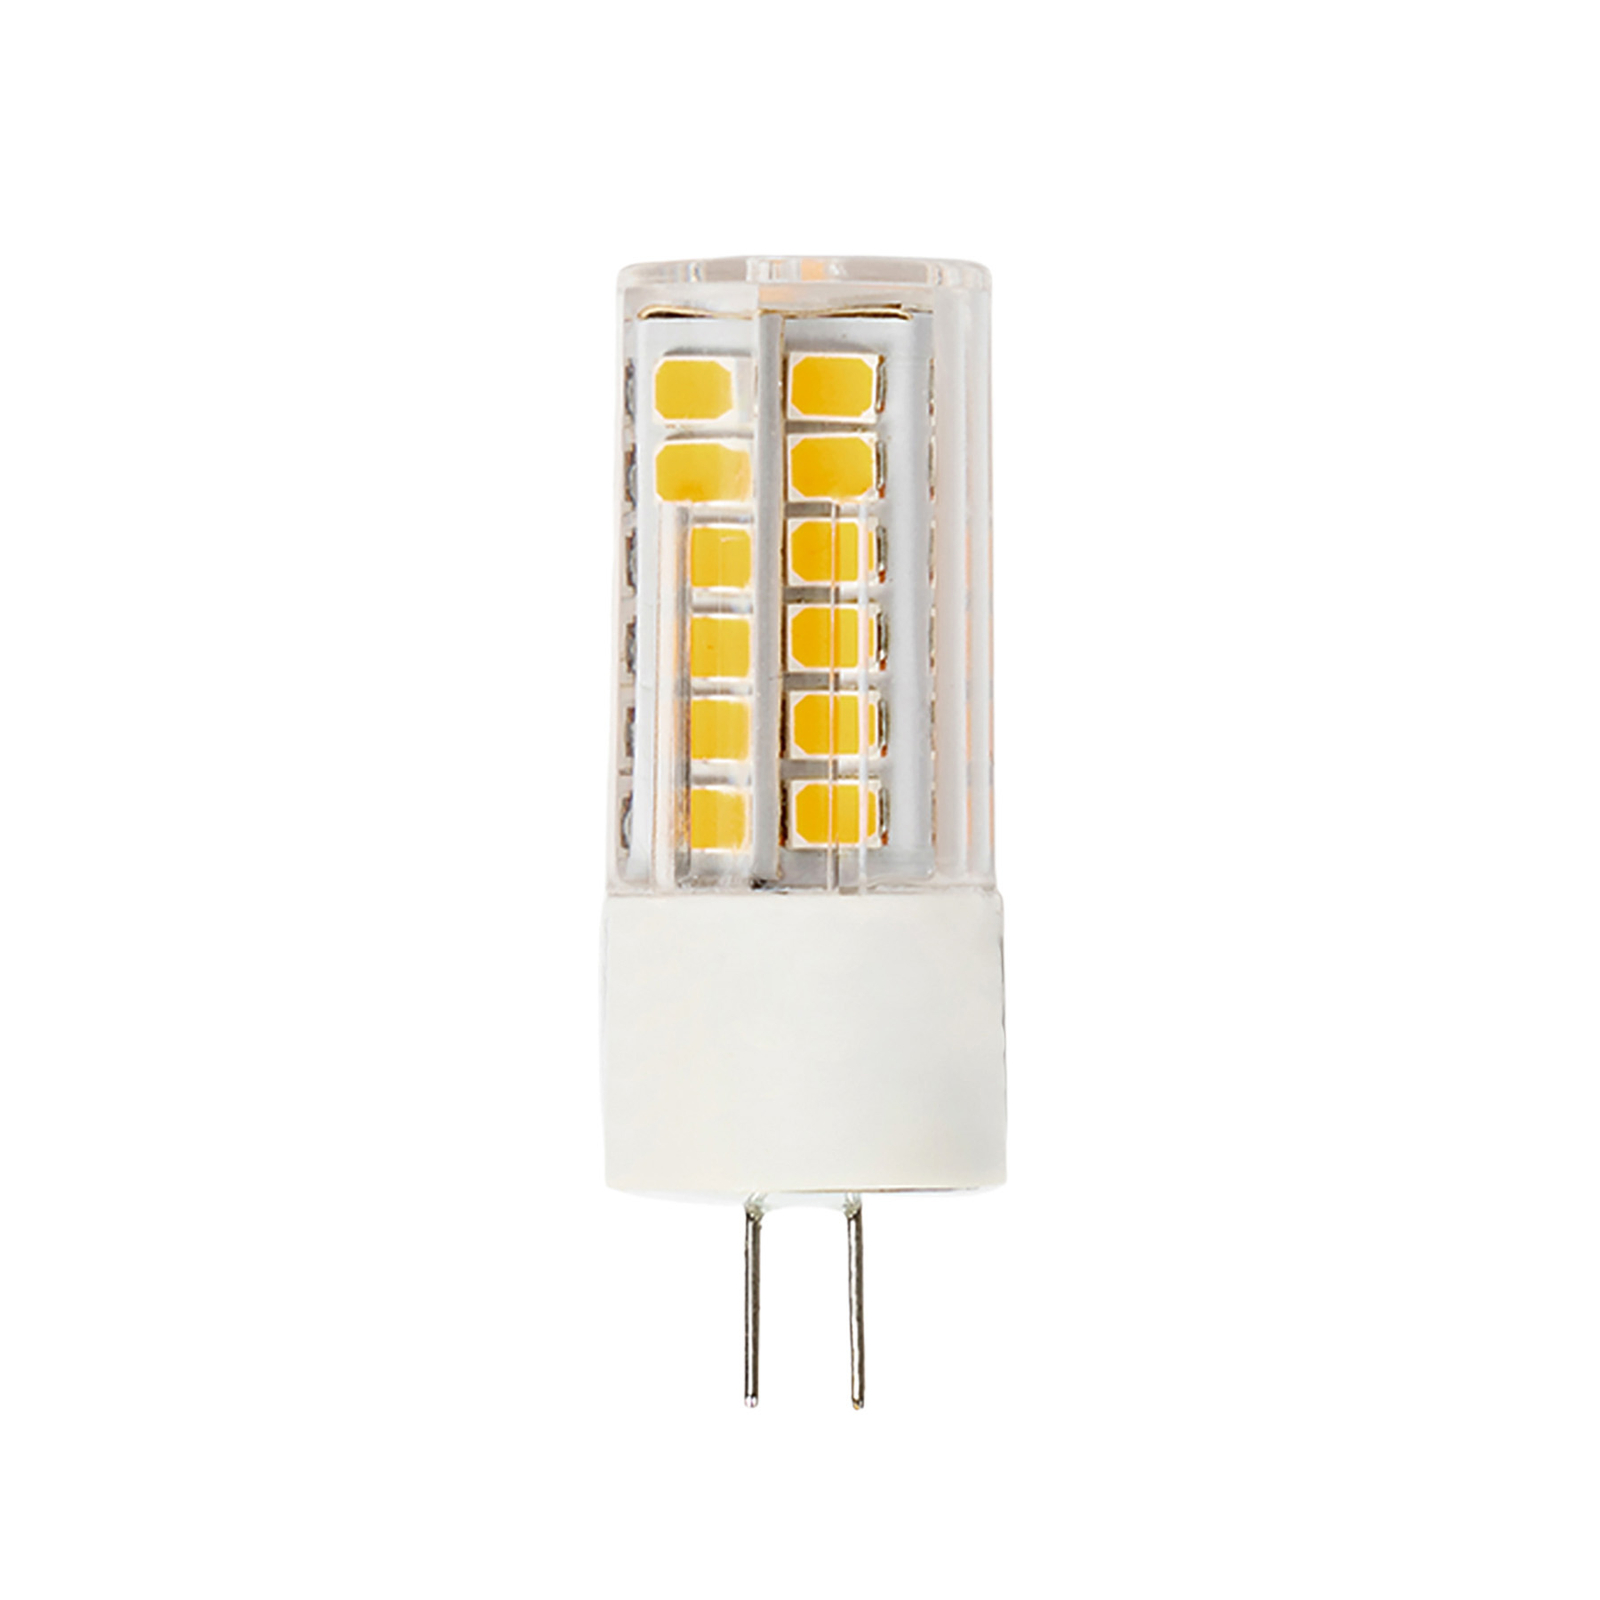 Arcchio bi-pin LED bulb G4 3.4 W 3,000 K 3-pack